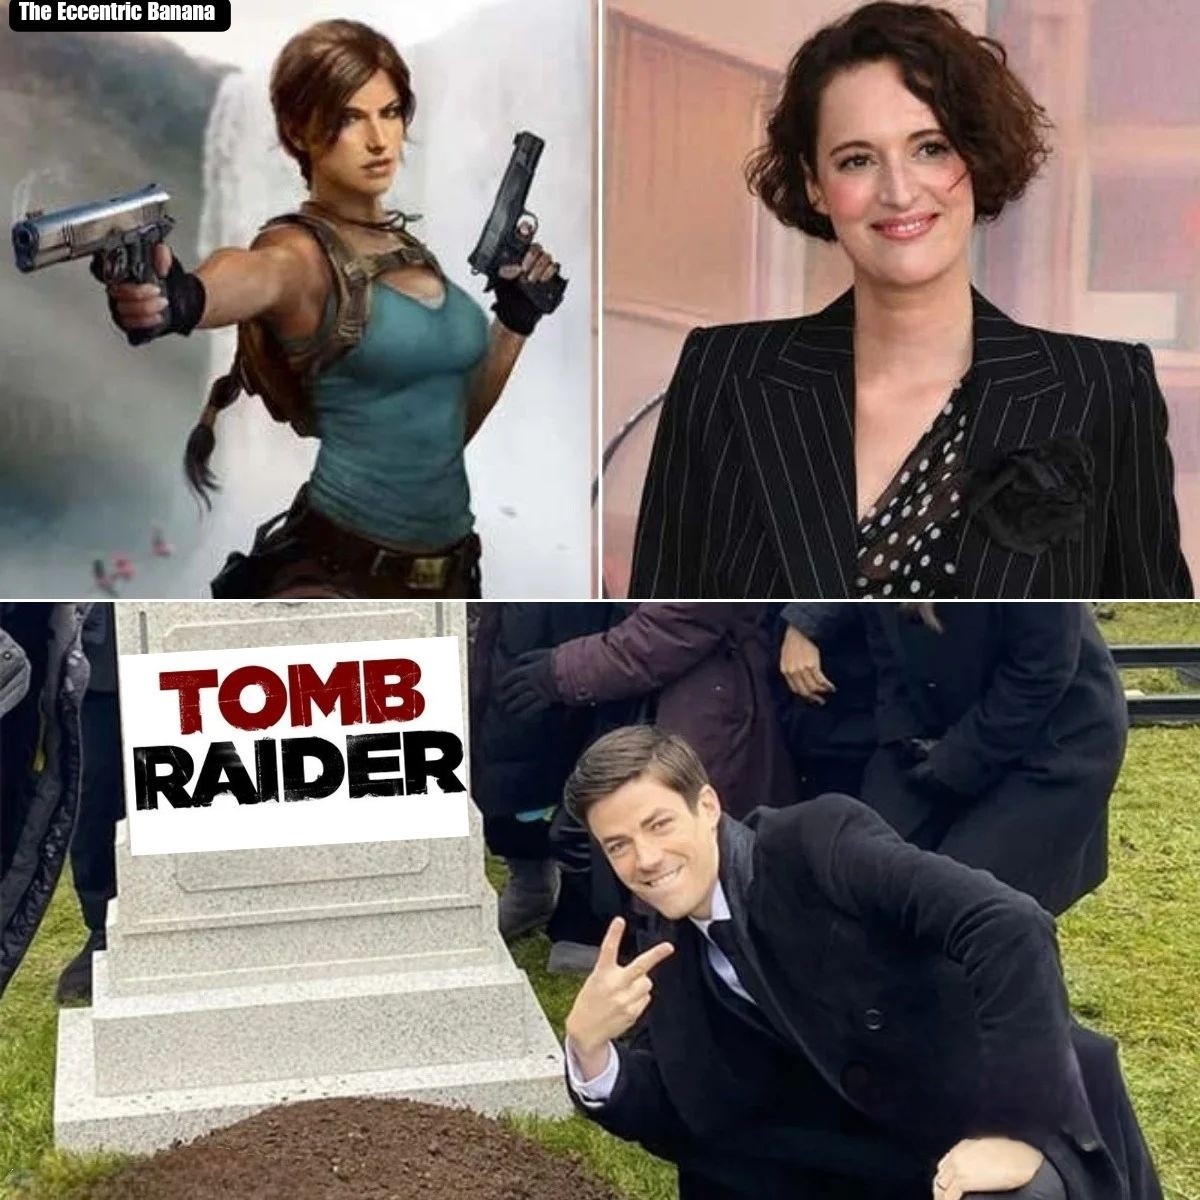 Kiss Tomb Raider goodbye! 
#TombRaider #Memes #Feminist #PhoebeWallerBridge #Feminism
#DEI #TheMessage #Woke #Eve
#StellarBlade #Helldivers #Humor
#StarWarsOutlaws #Amazon #Streaming  #LaraCroft #Comedy #SweetBabyInc #Games #Gaming #VideoGames #Representation #Funny #Ubisoft